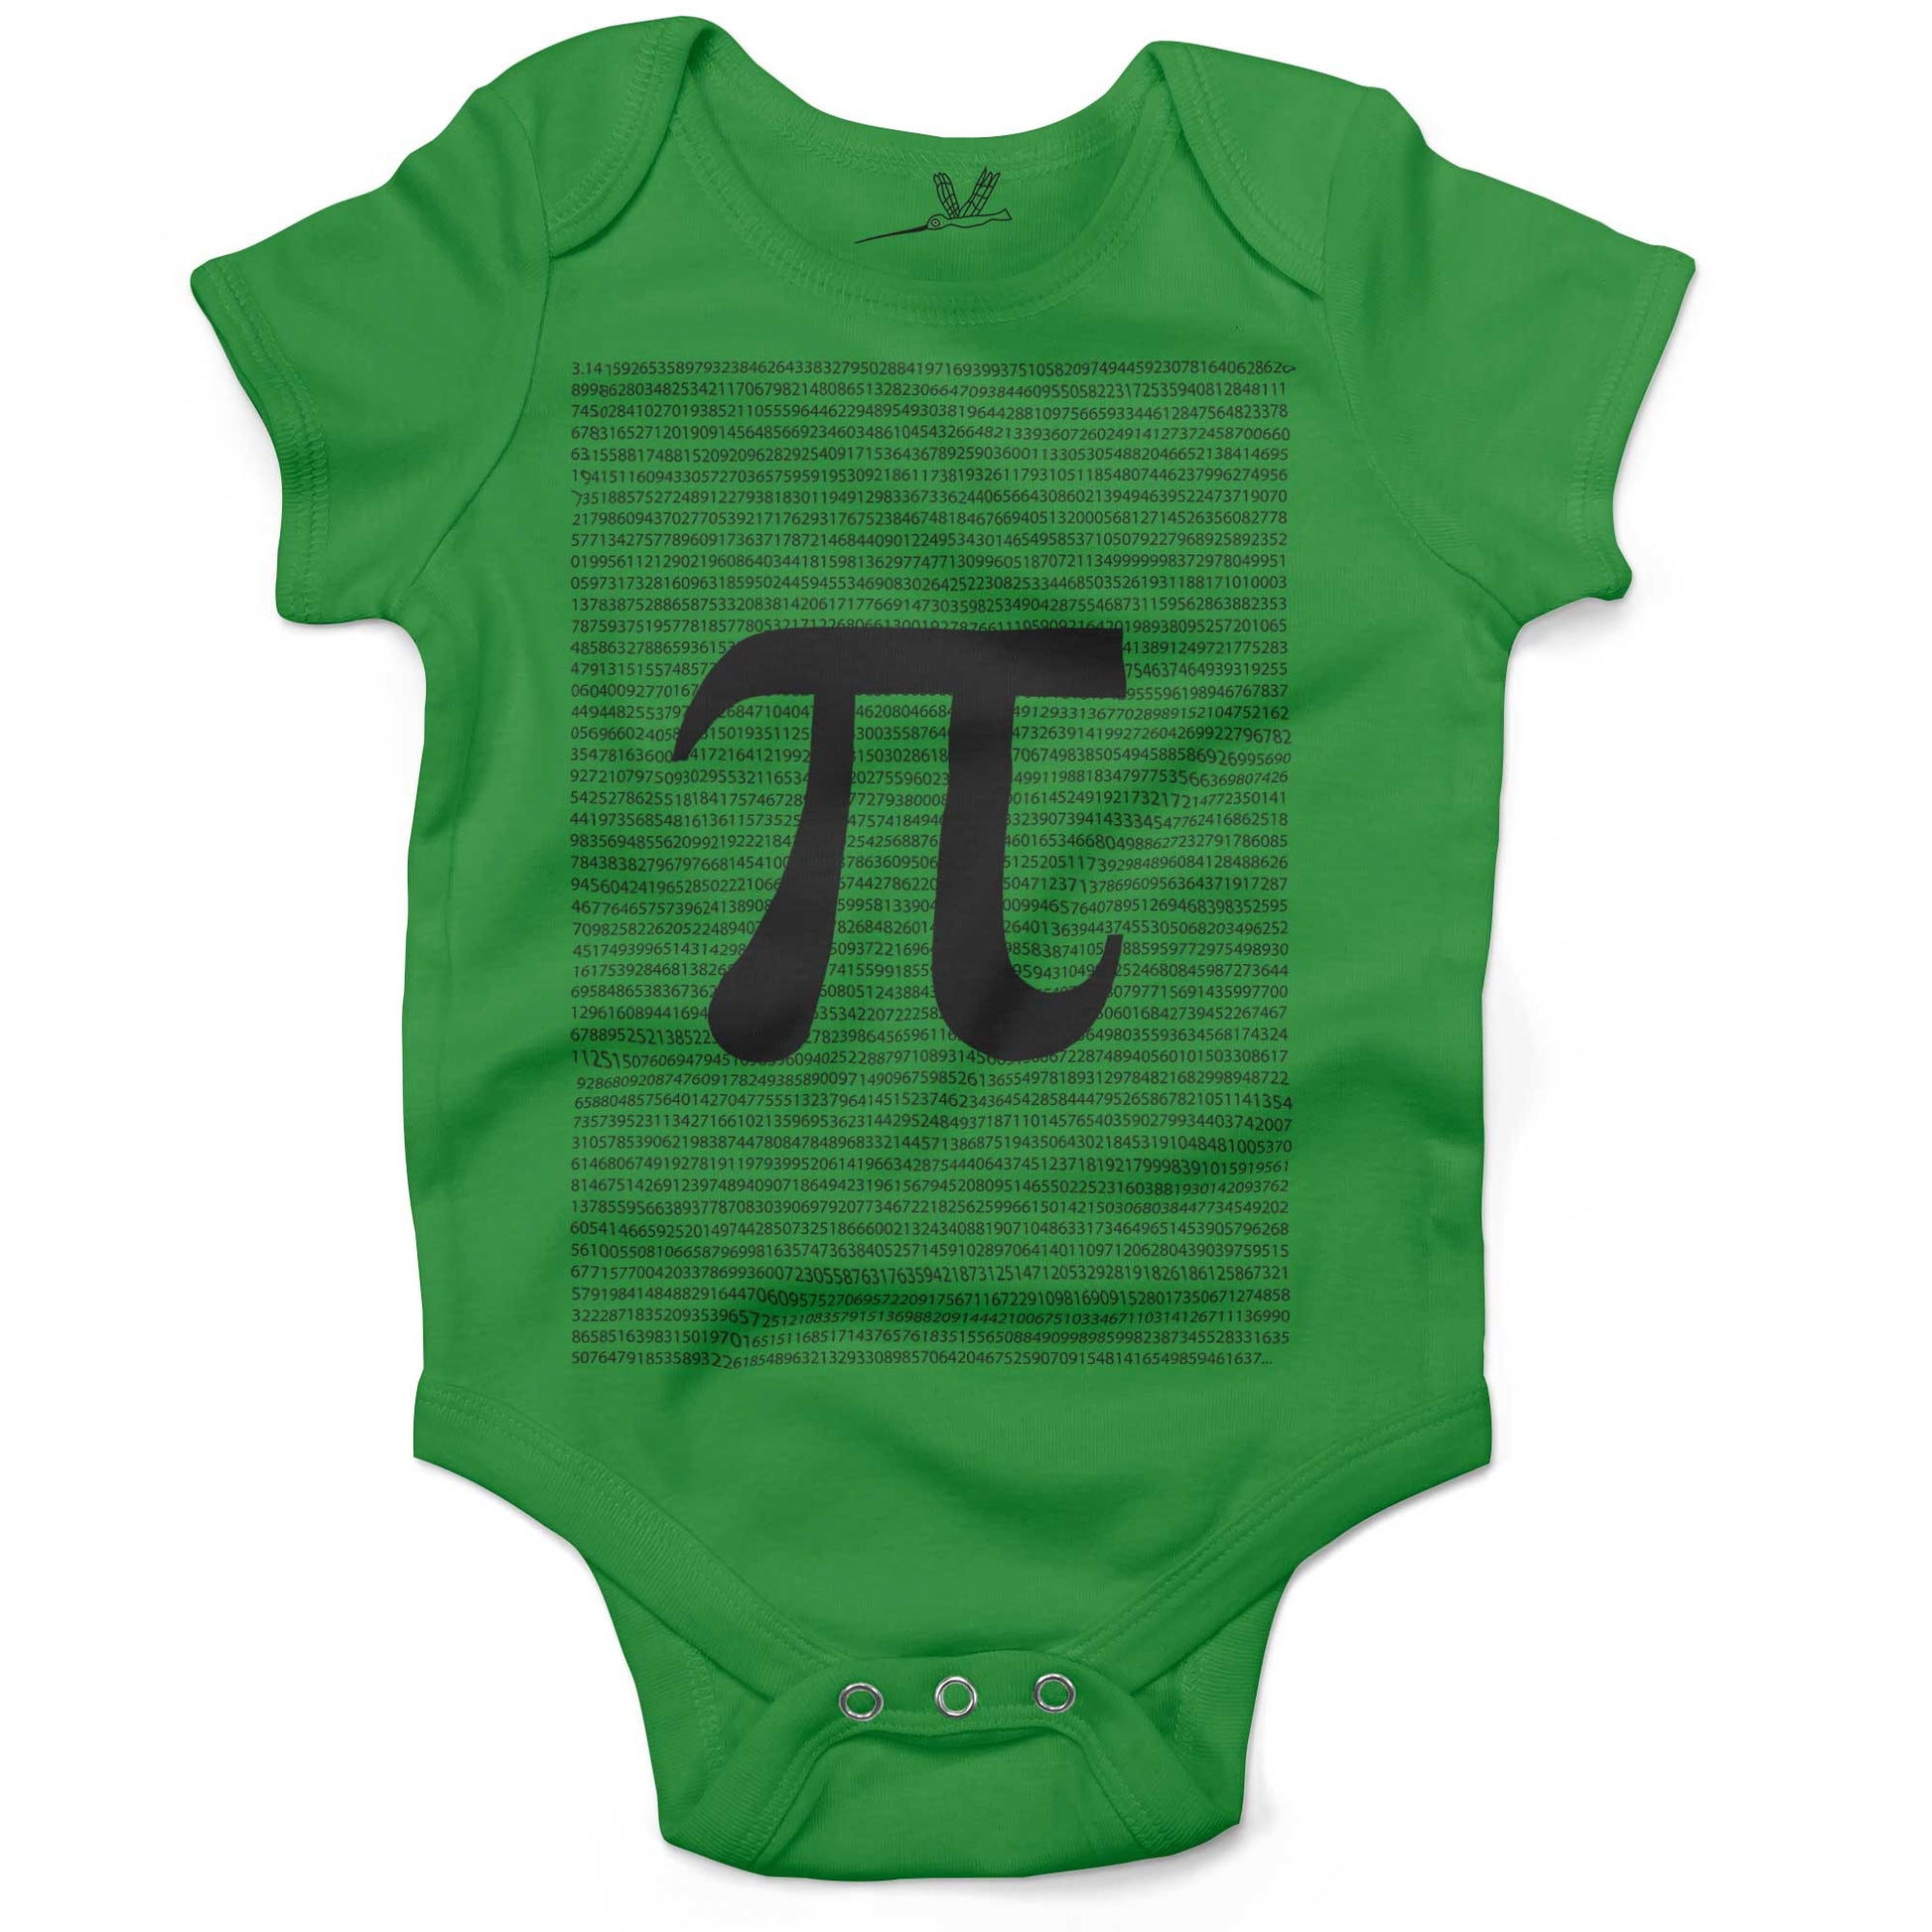 Irrational Pi Infant Bodysuit-Grass Green-3-6 months